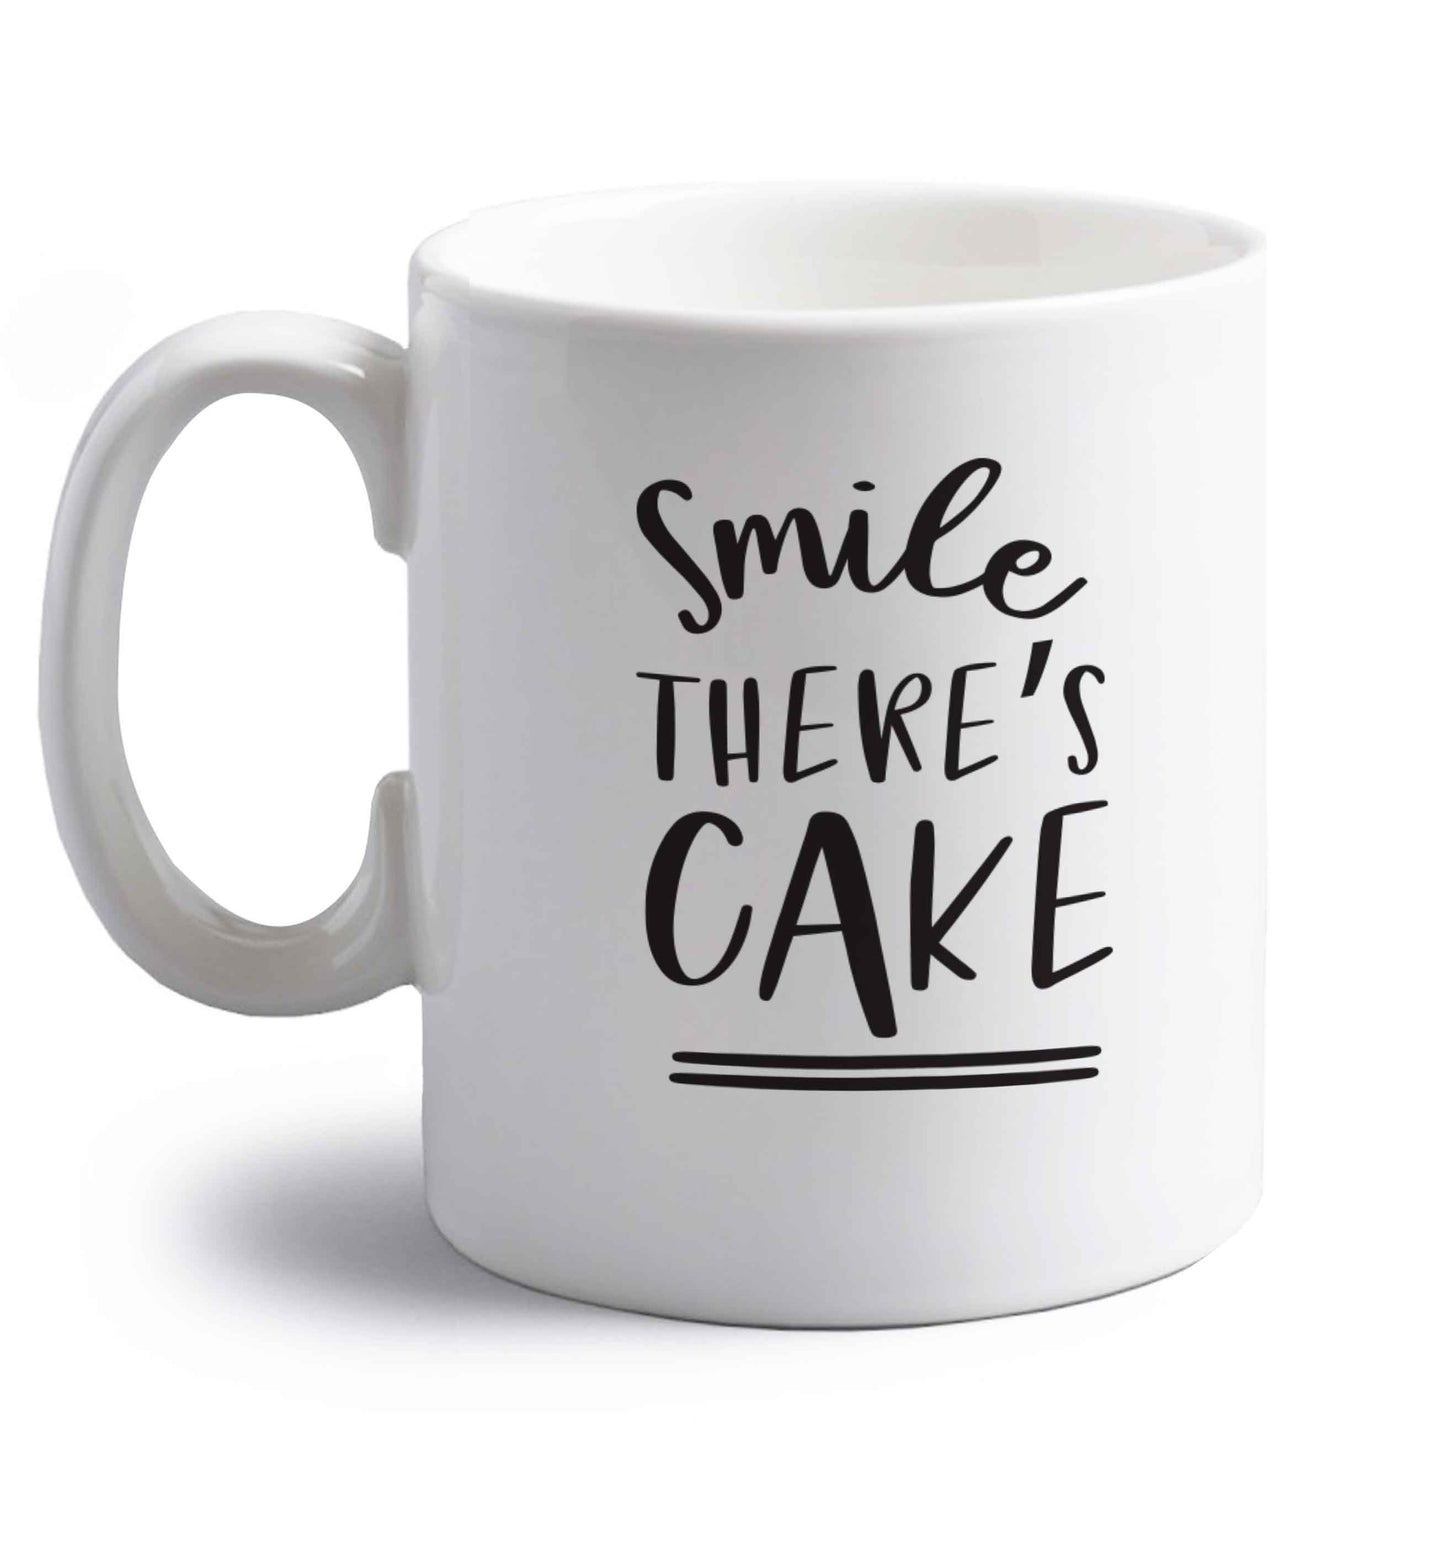 Smile there's cake right handed white ceramic mug 